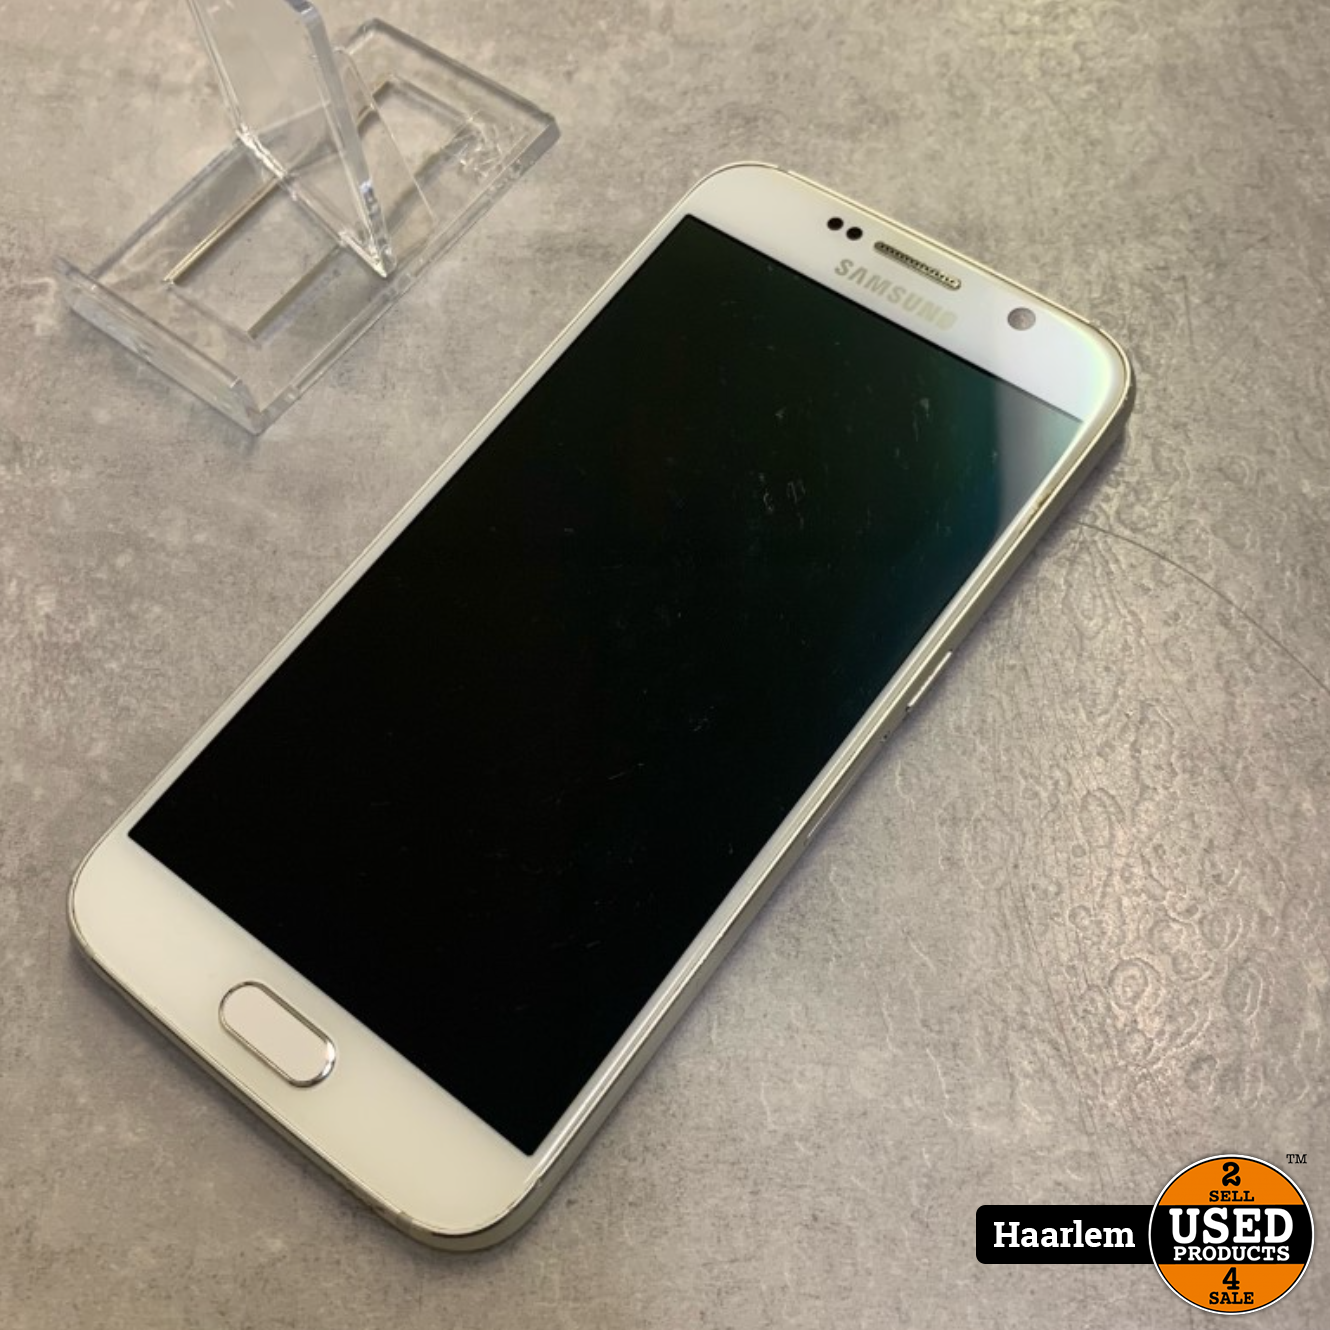 Berouw bolvormig resultaat Samsung Galaxy S6 32gb wit in doos - Used Products Haarlem Cronjéstraat